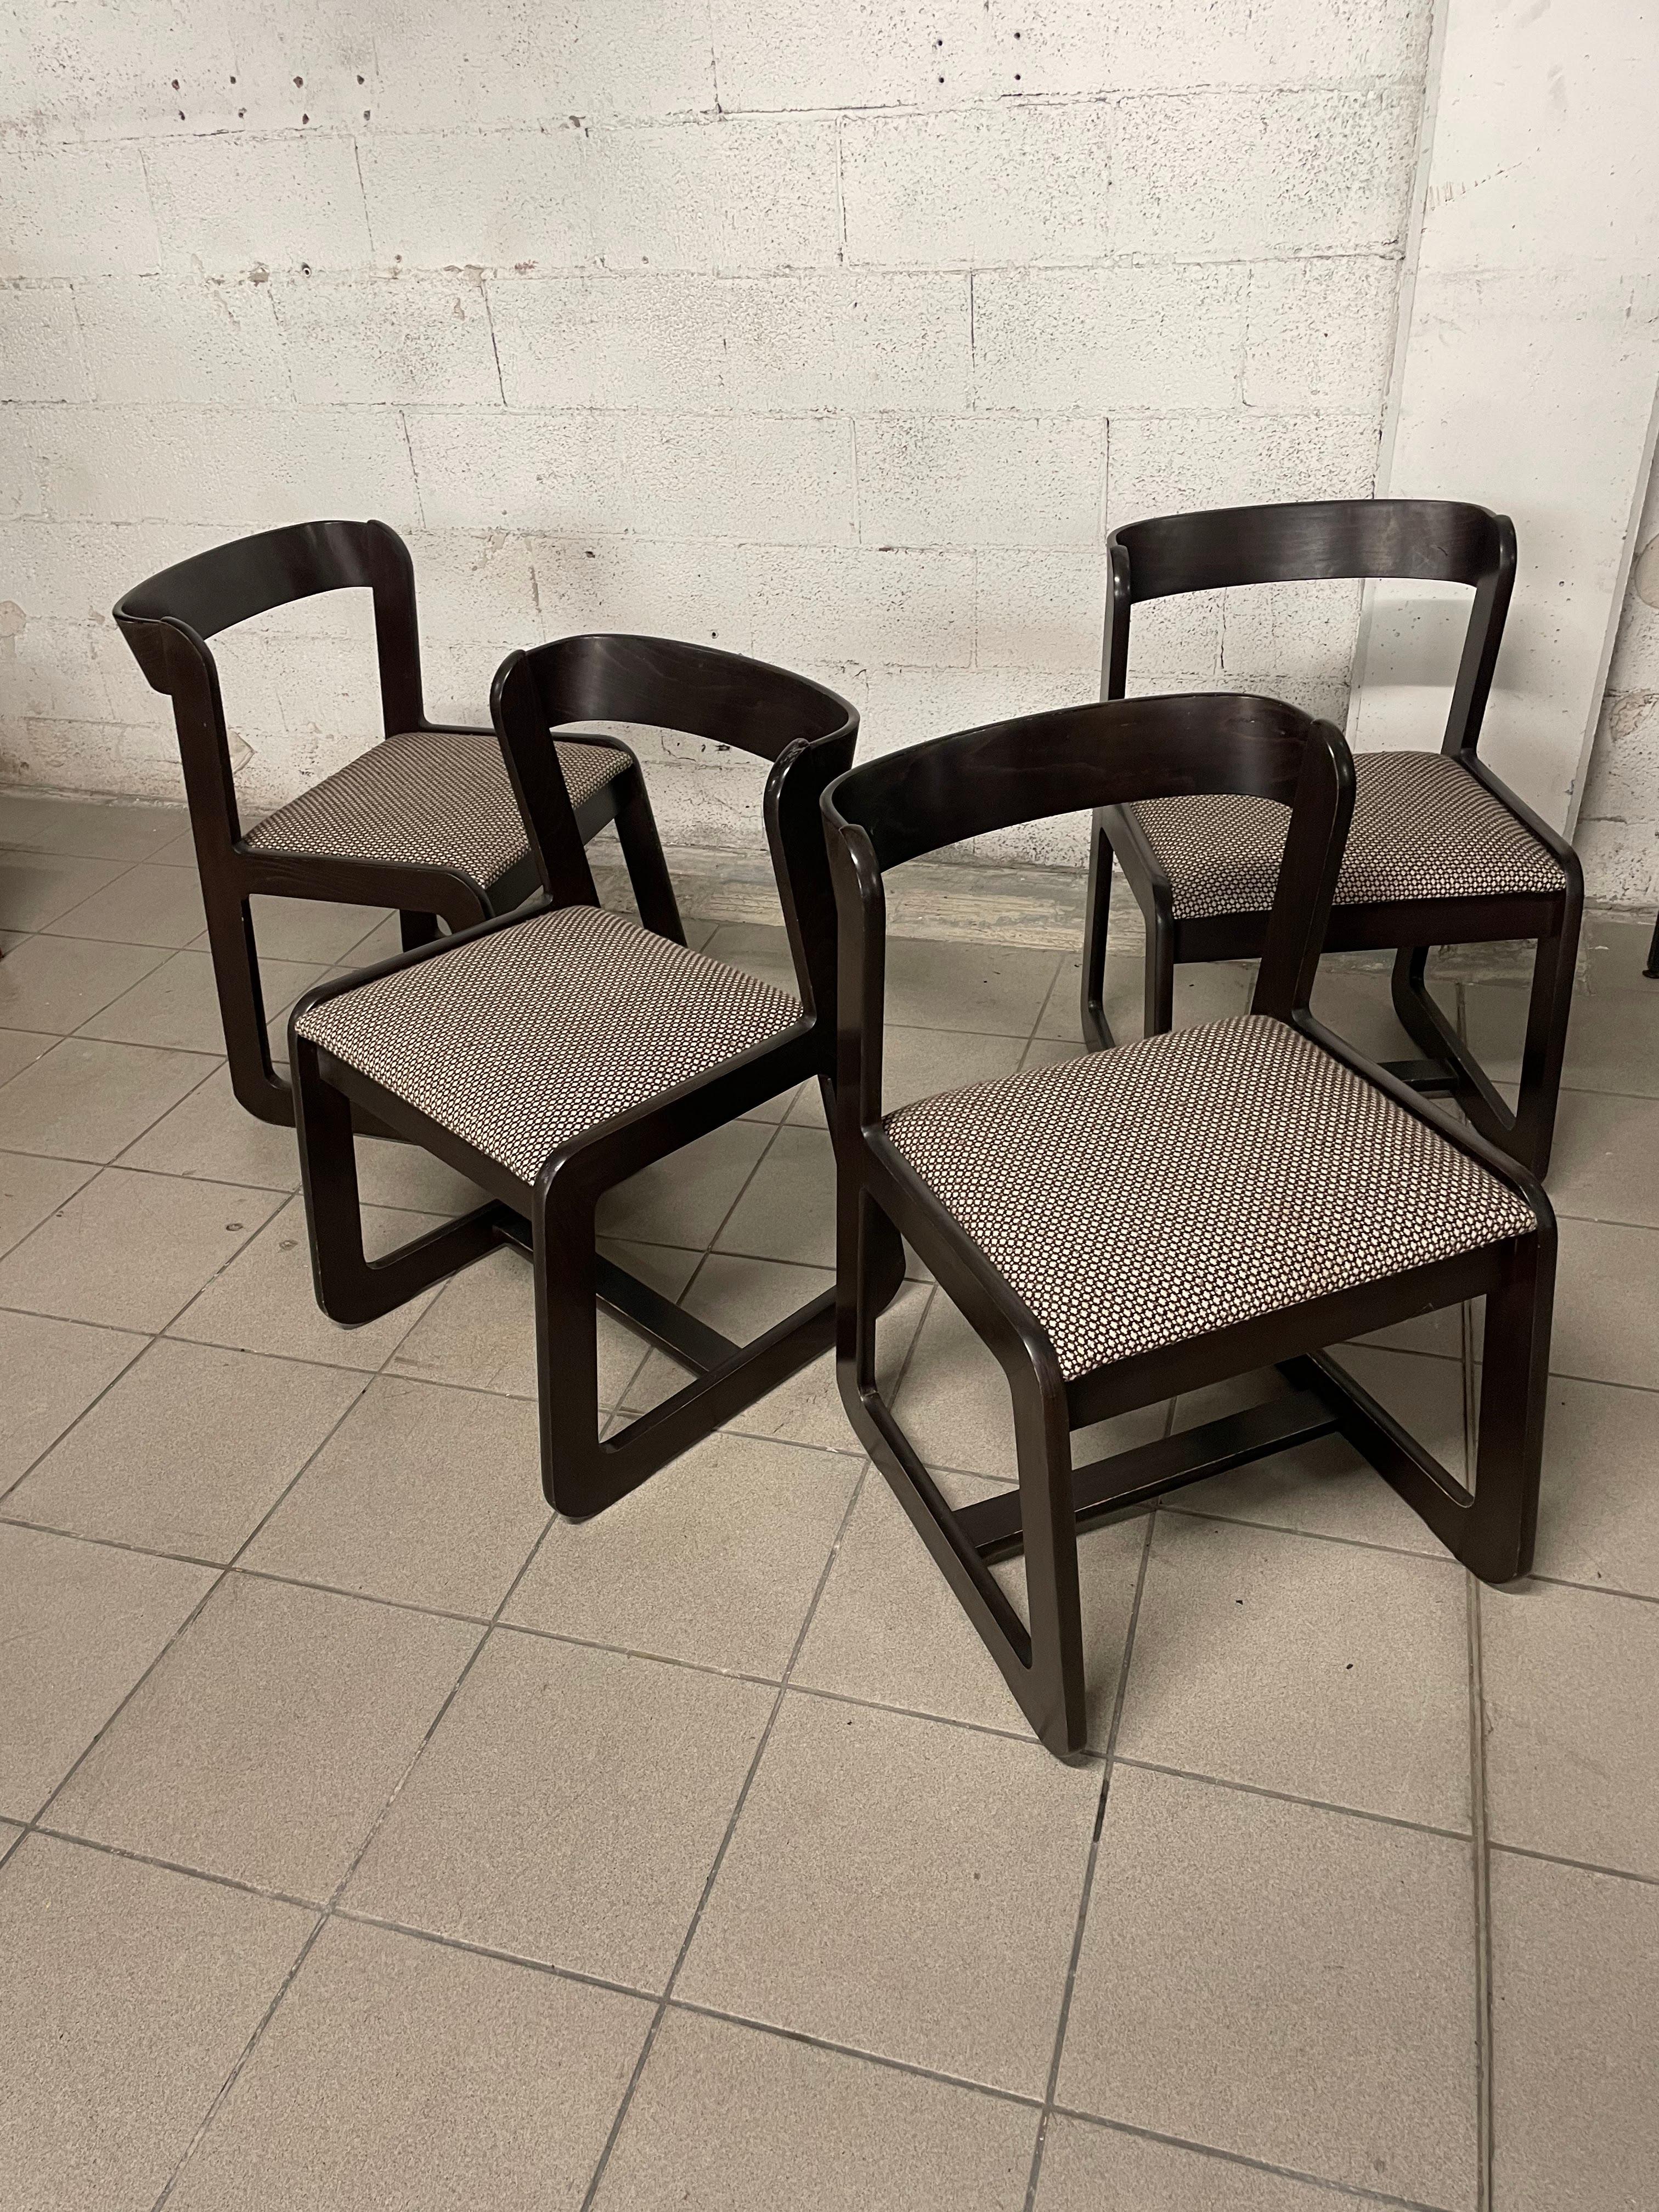 Set di quattro sedie in faggio tinto degli anni '70 nello stile di Willy Rizzo per Mario Sabot.

La particularité du design est due à la structure en cuir courbé qui confère à ces sièges une ligne morbide et toujours attrayante.

Les conditions de